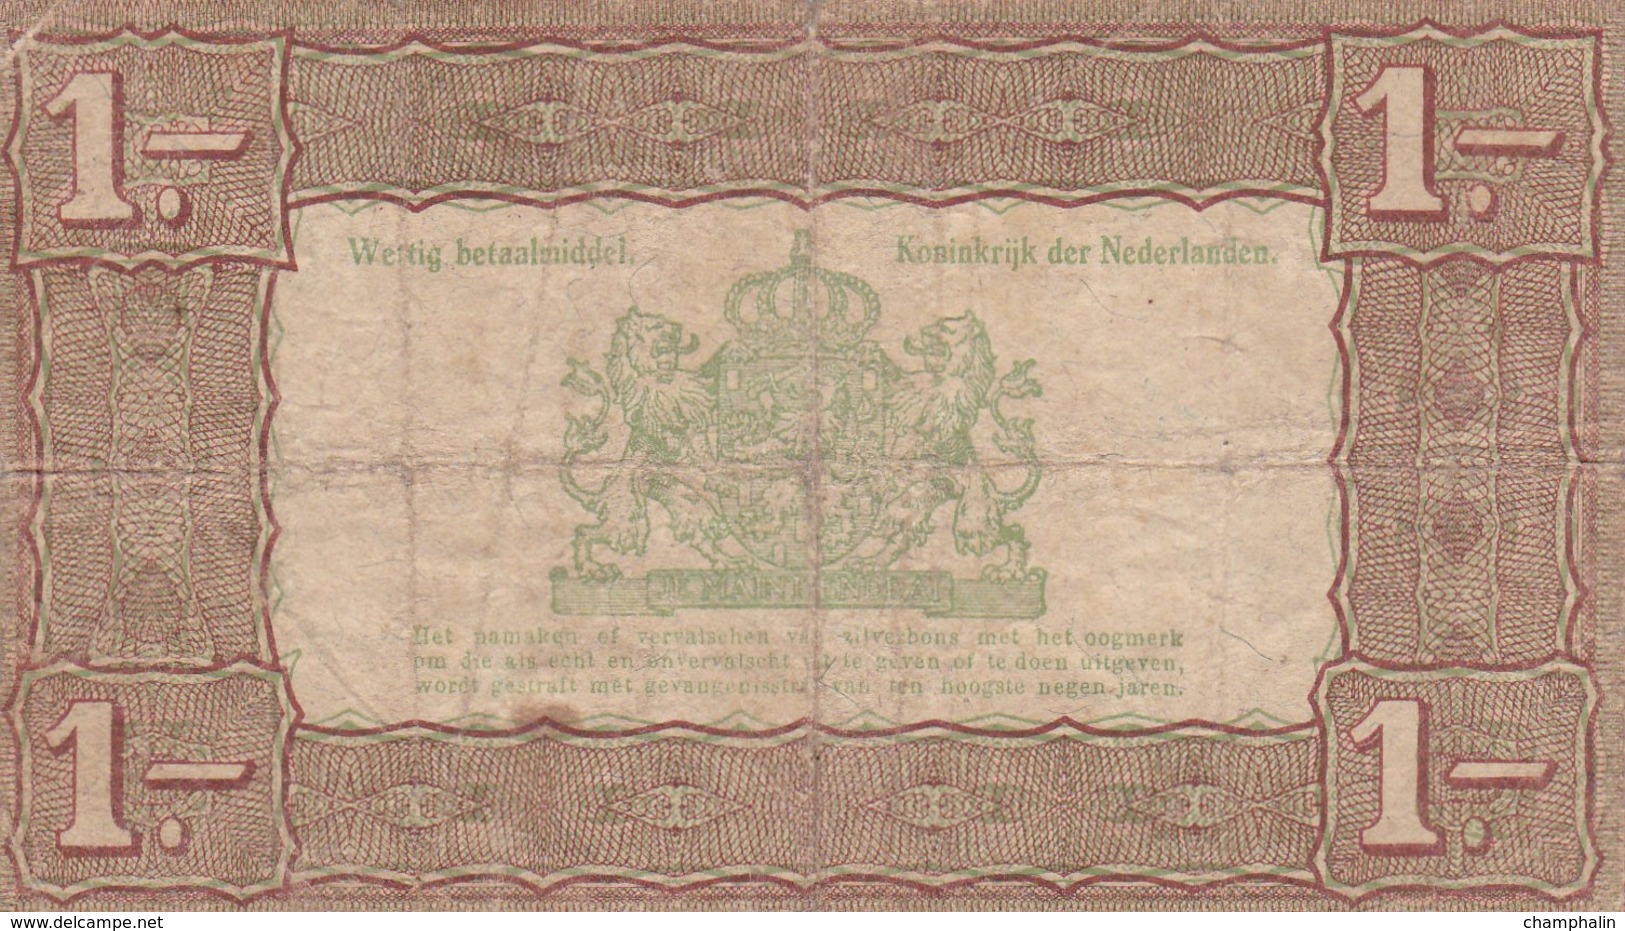 Pays-Bas - Billet De 1 Gulden Zilverbon - 1er Octobre 1938 - 1 Gulden